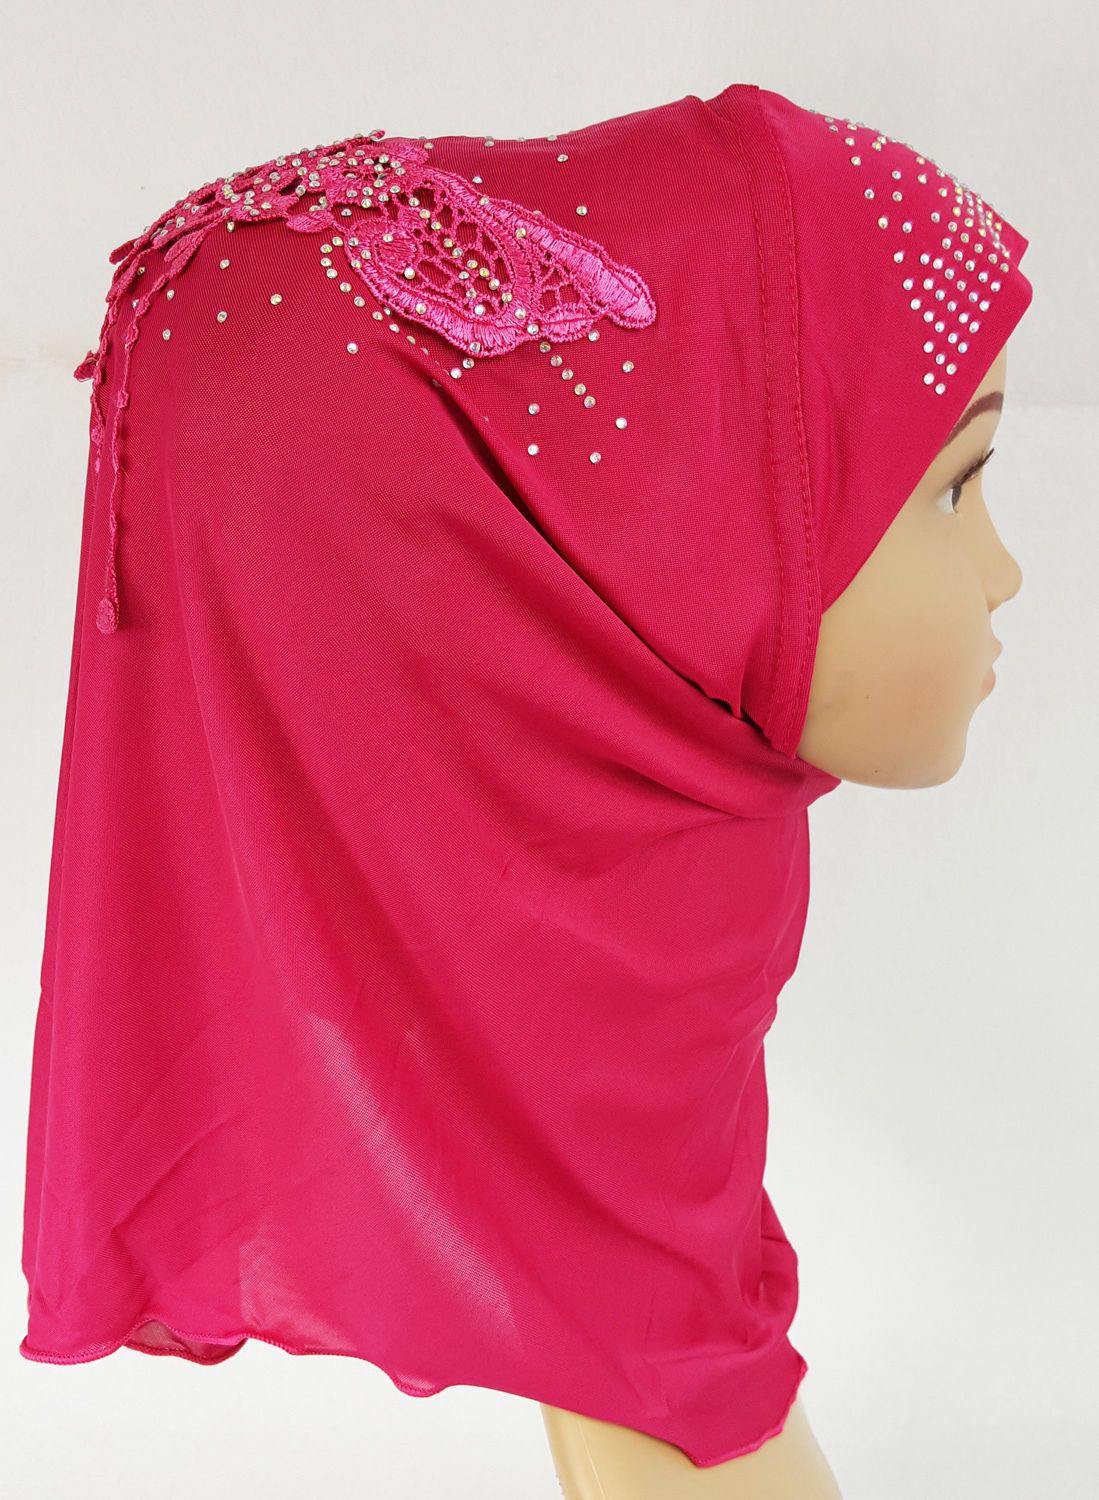 NEW Ice Silk Toddler Kids Children Hijab Islamic Scarf Shawls 2-8T - Arabian Shopping Zone